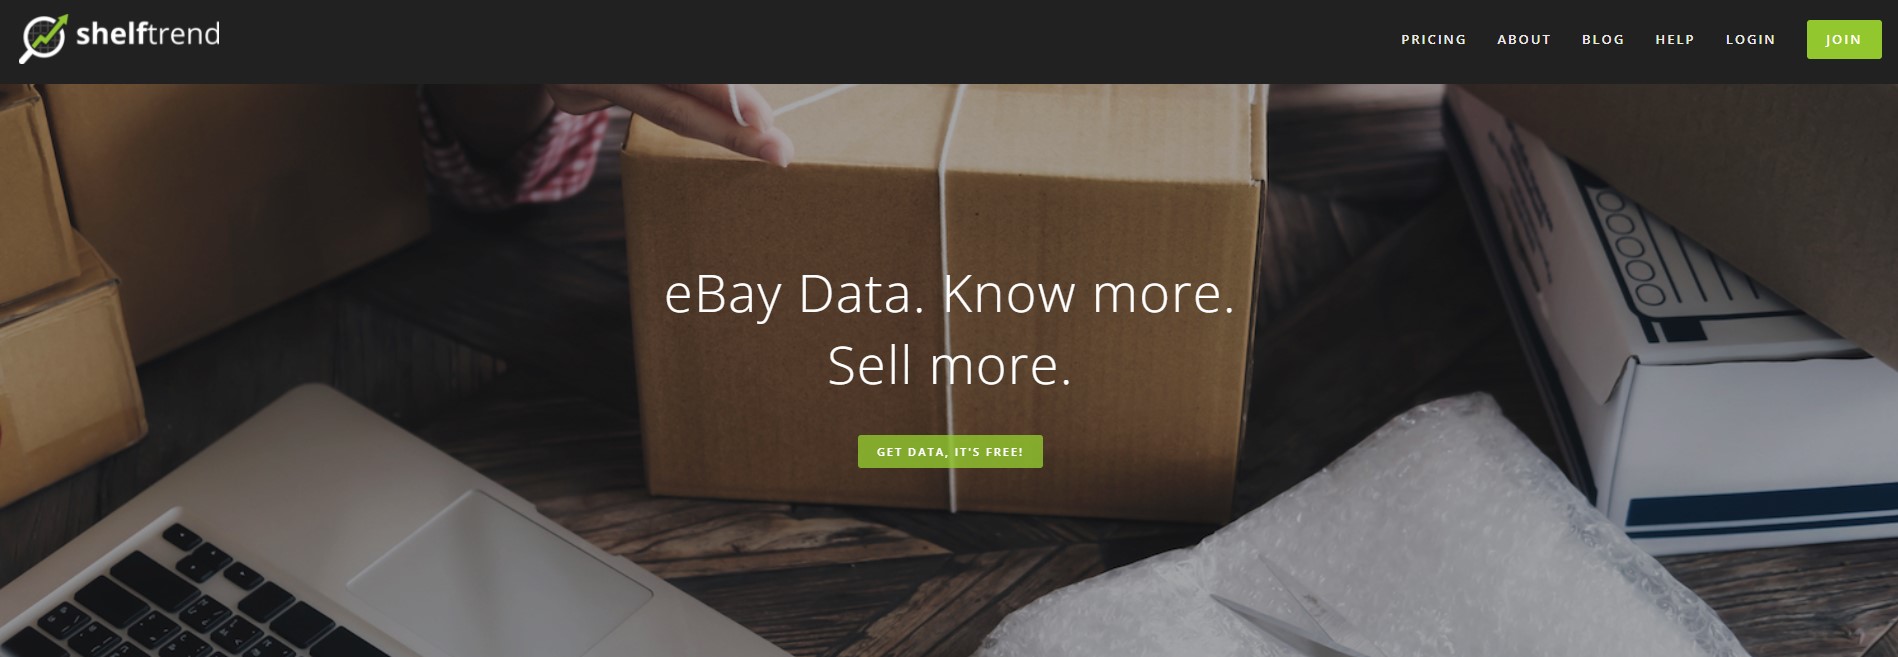 ShelfTrend ebay analytic tools